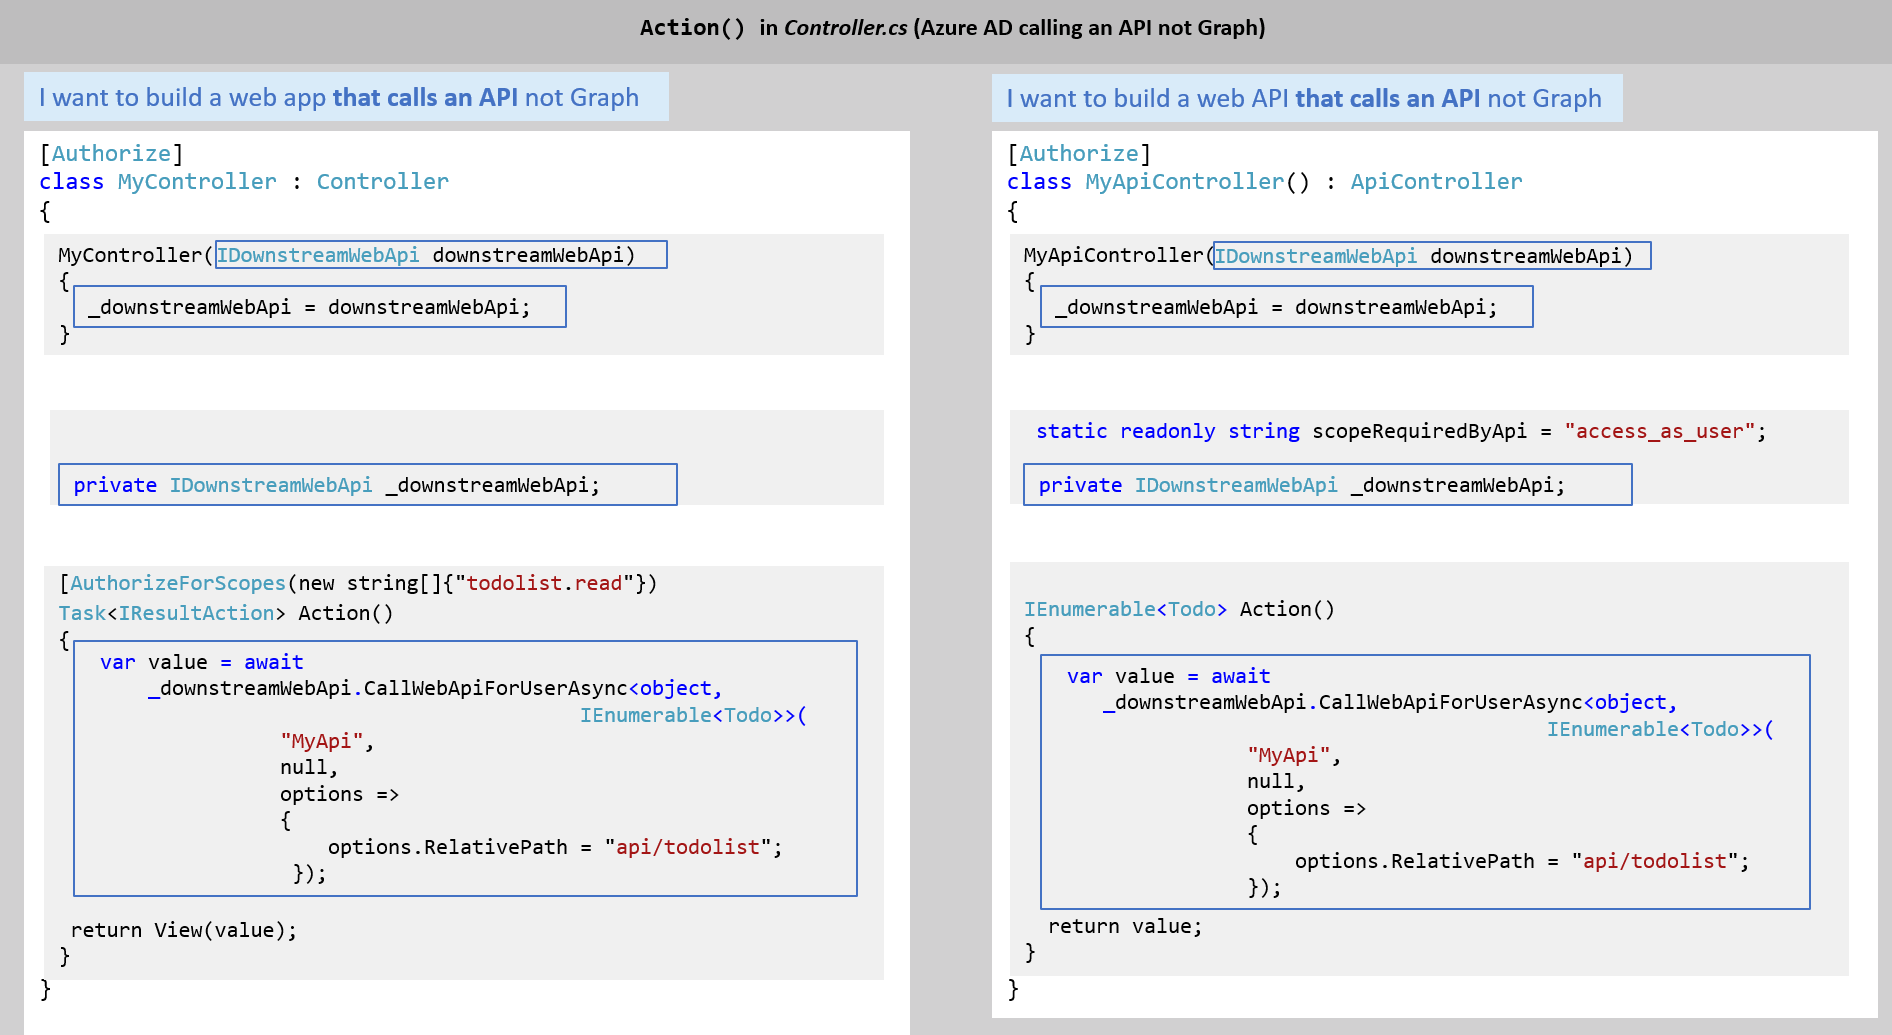 image showing code updates when building a web app that calls a web API